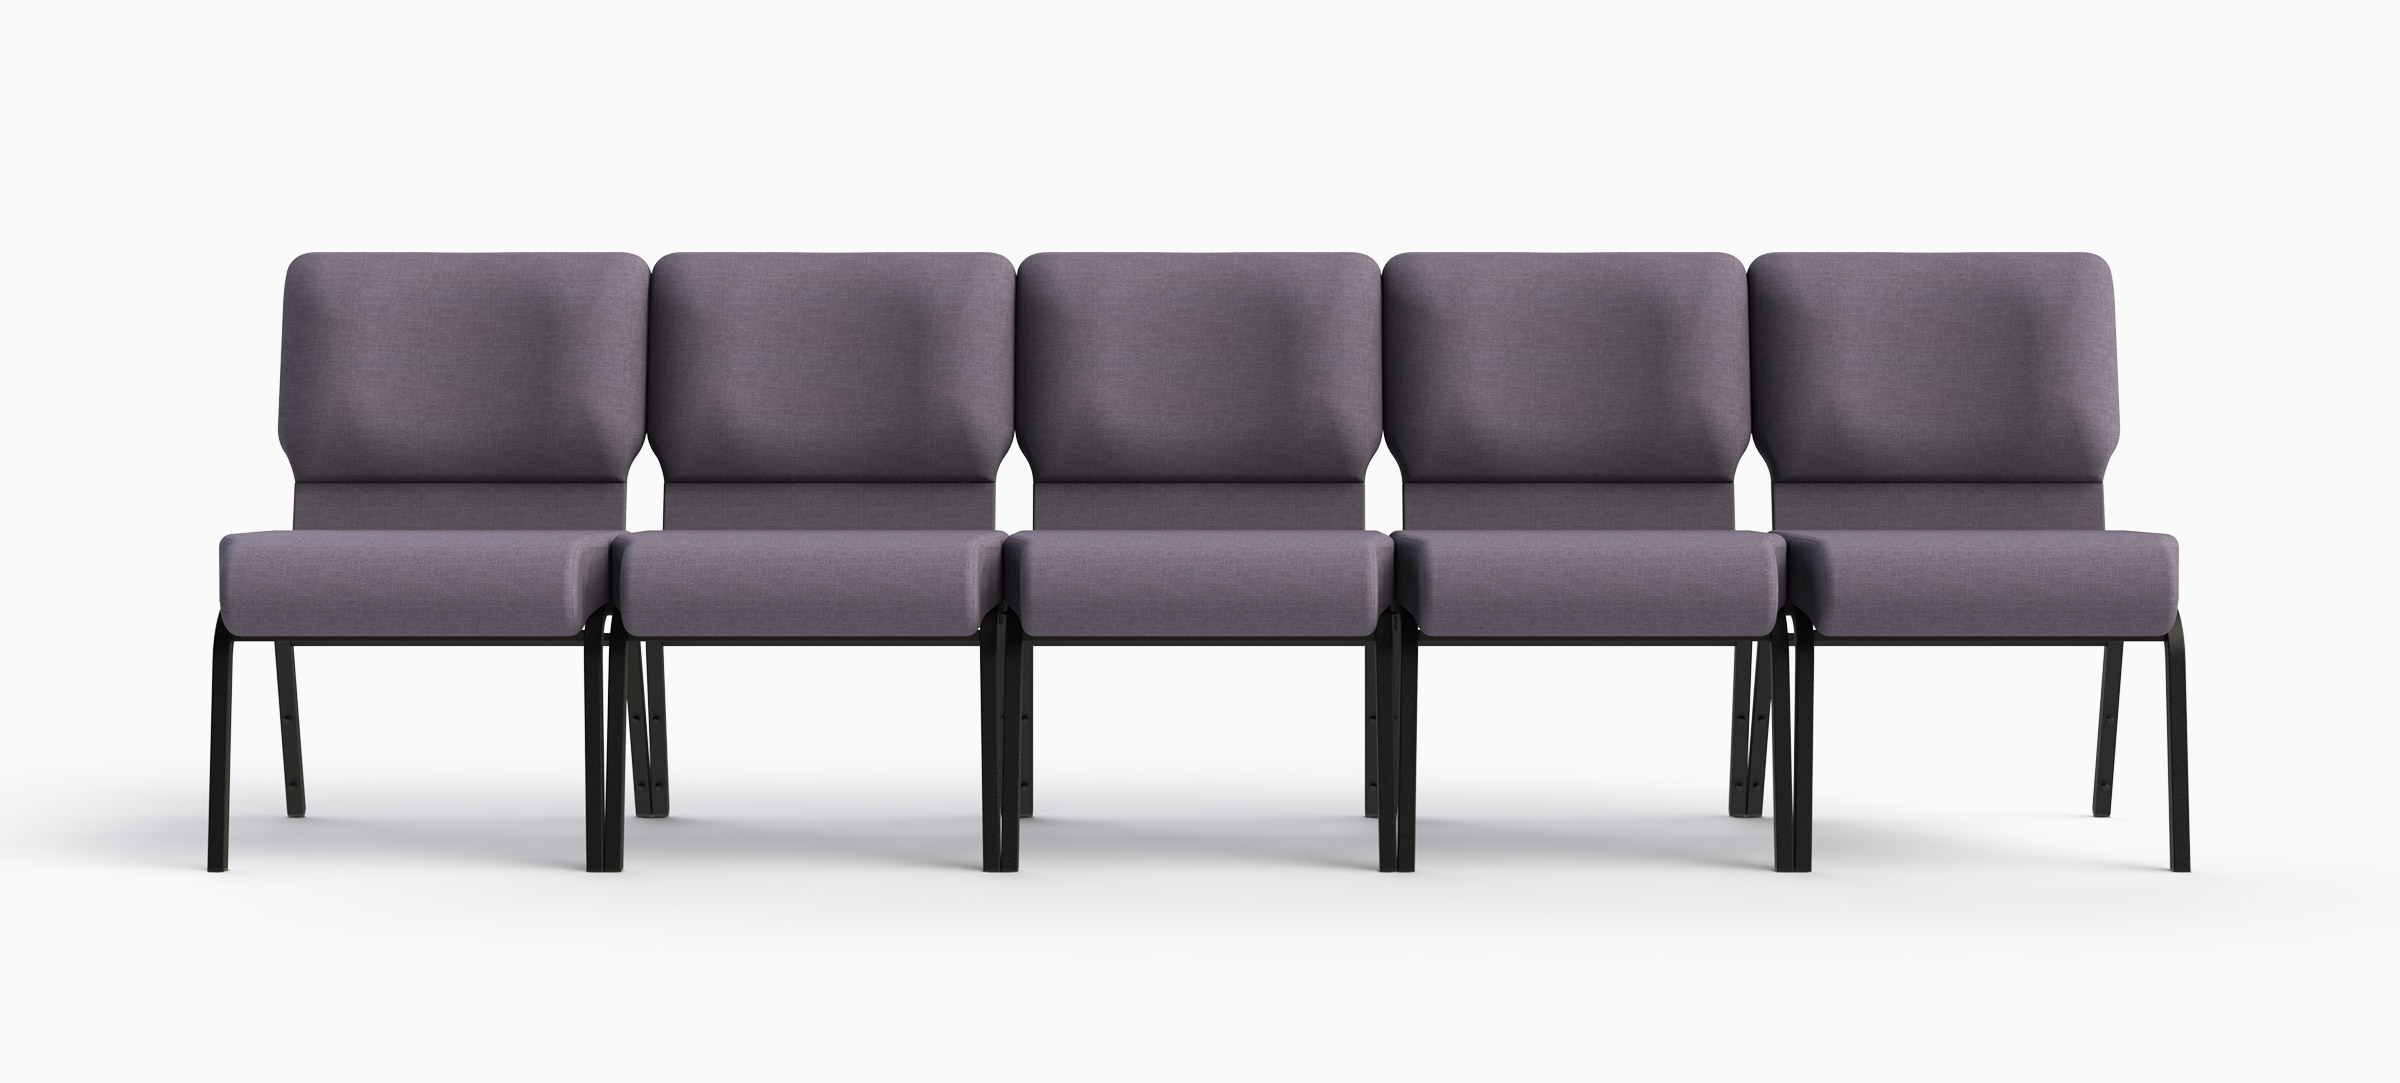 Purple Church Chairs by ComforTek (Interlocked)